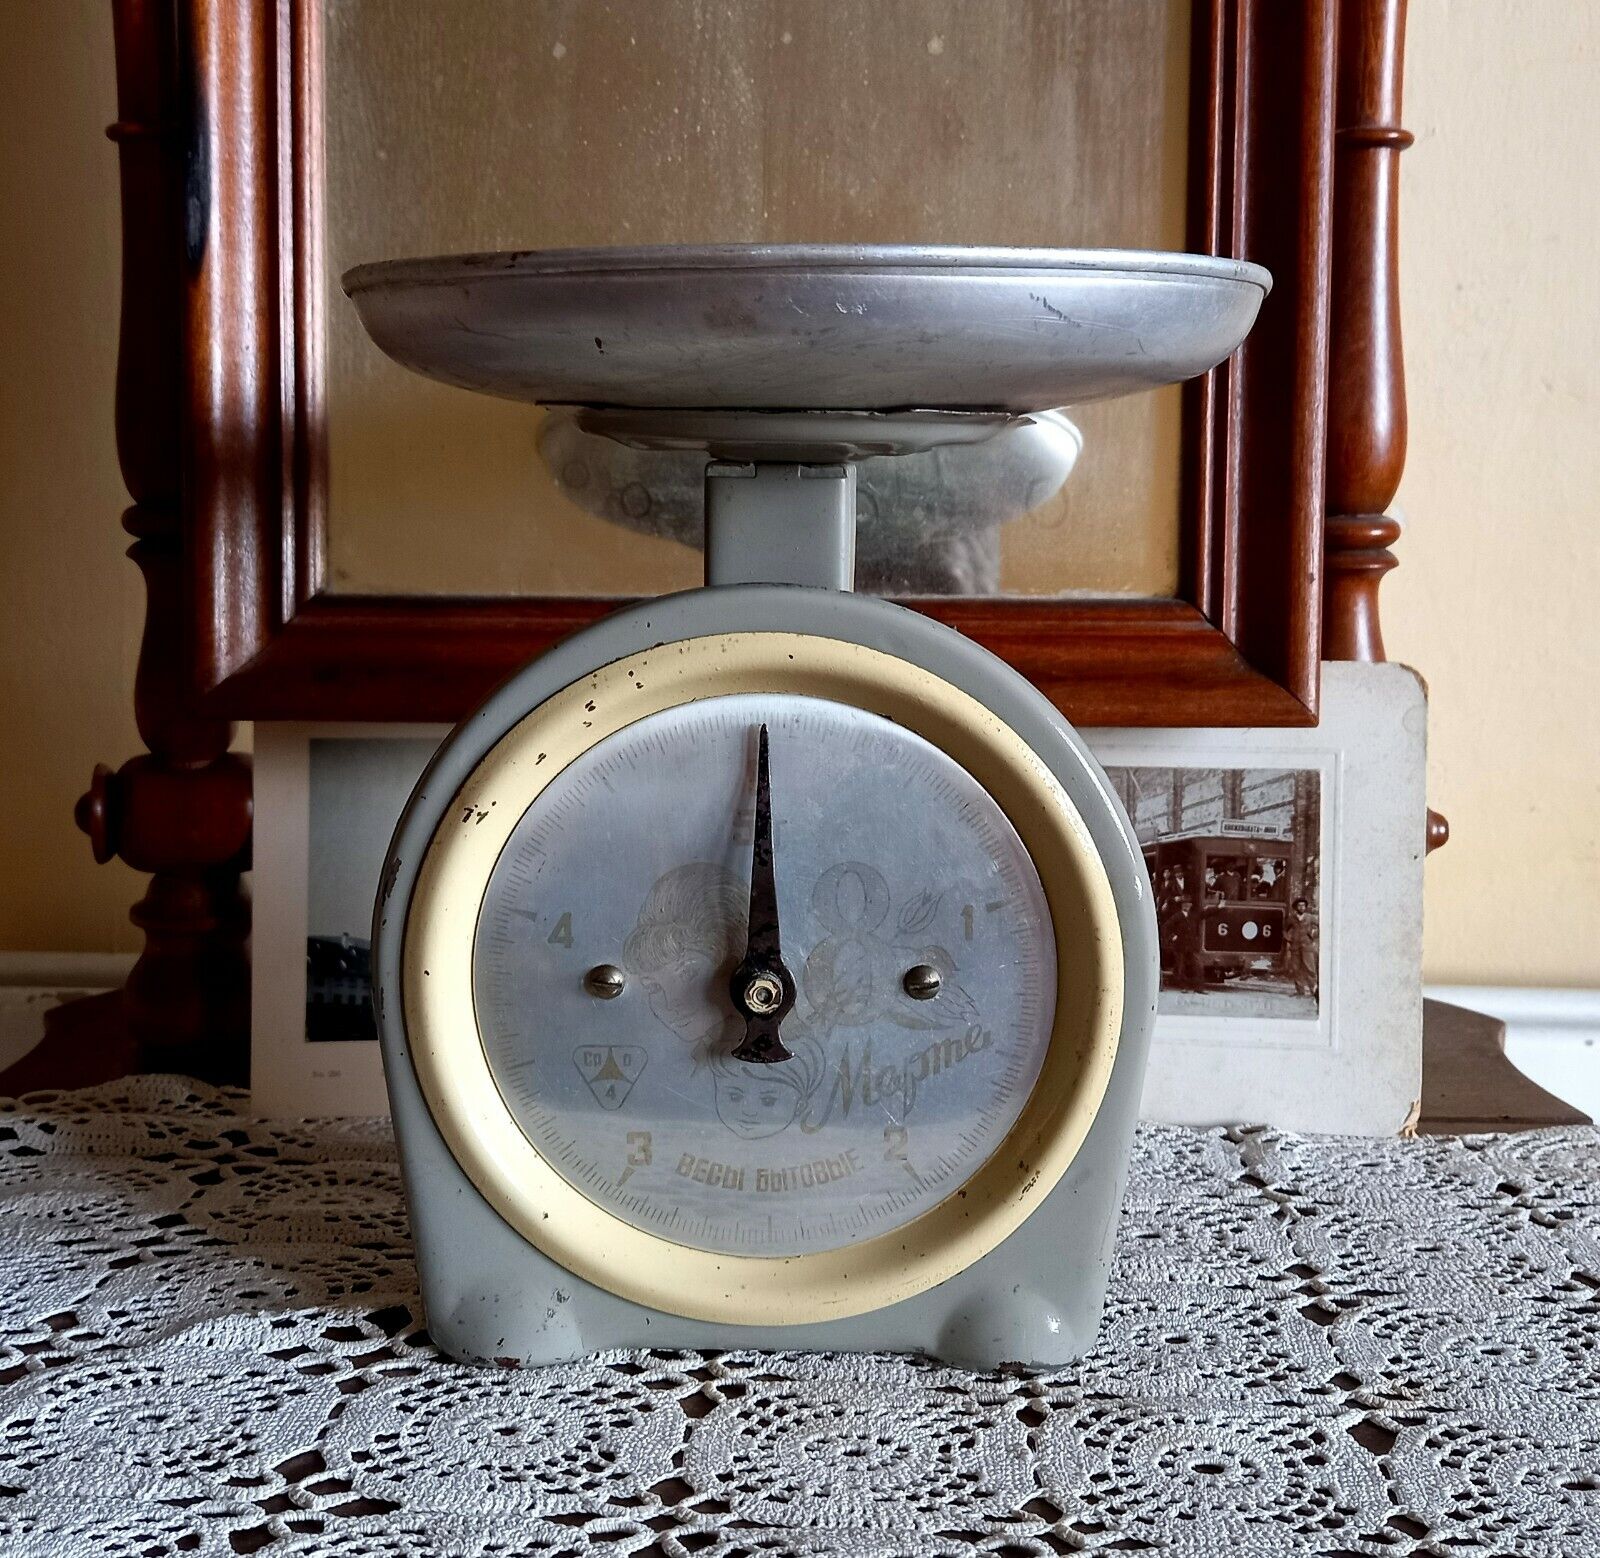 Vintage Kitchen Scale, Soviet scale, USSR scale, vintage gift decoration, WORKS